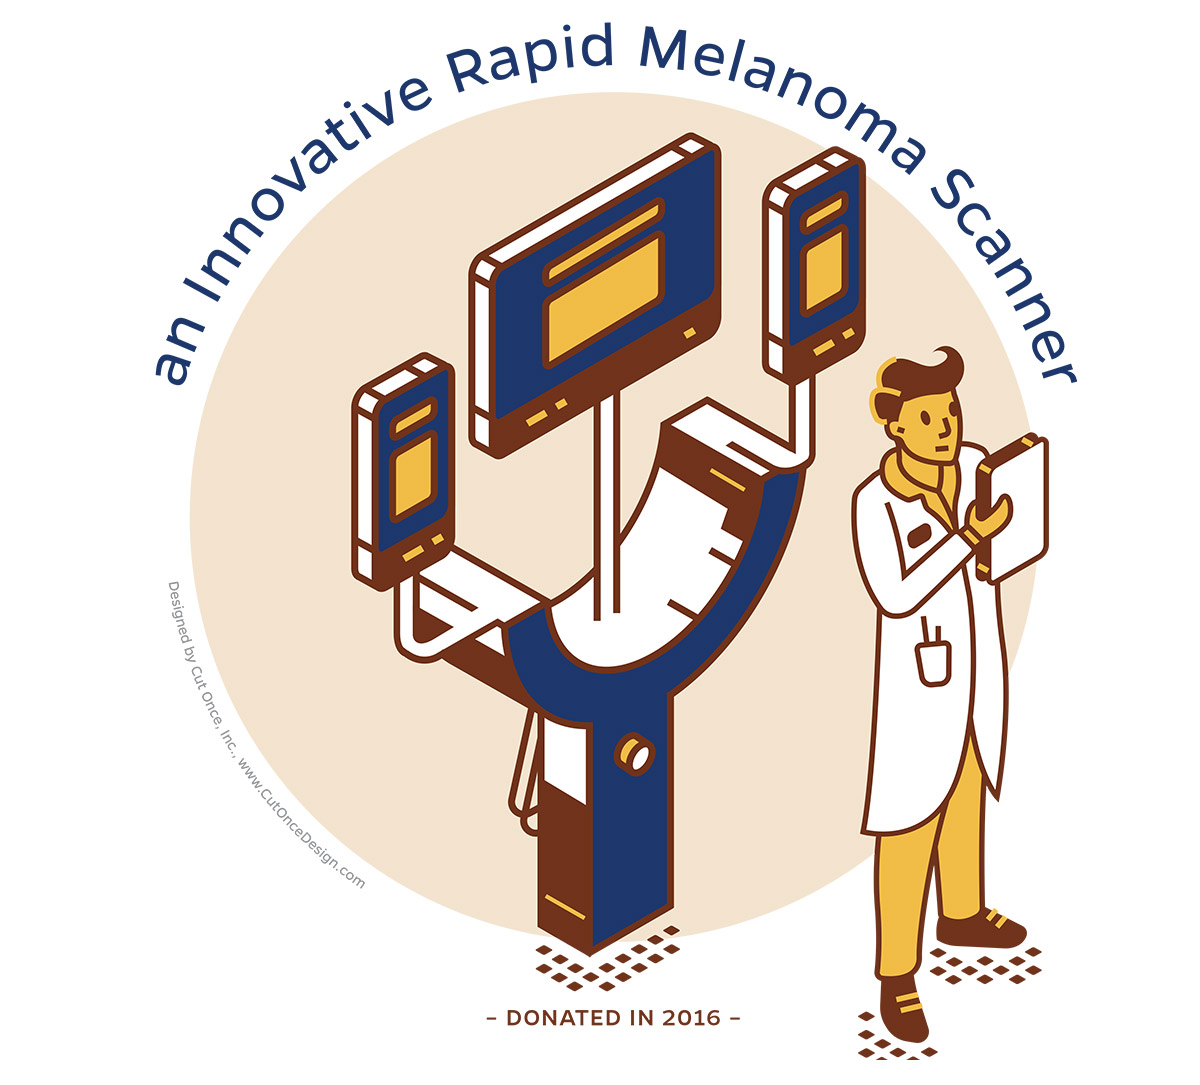 an innovative rapid melanoma scanner